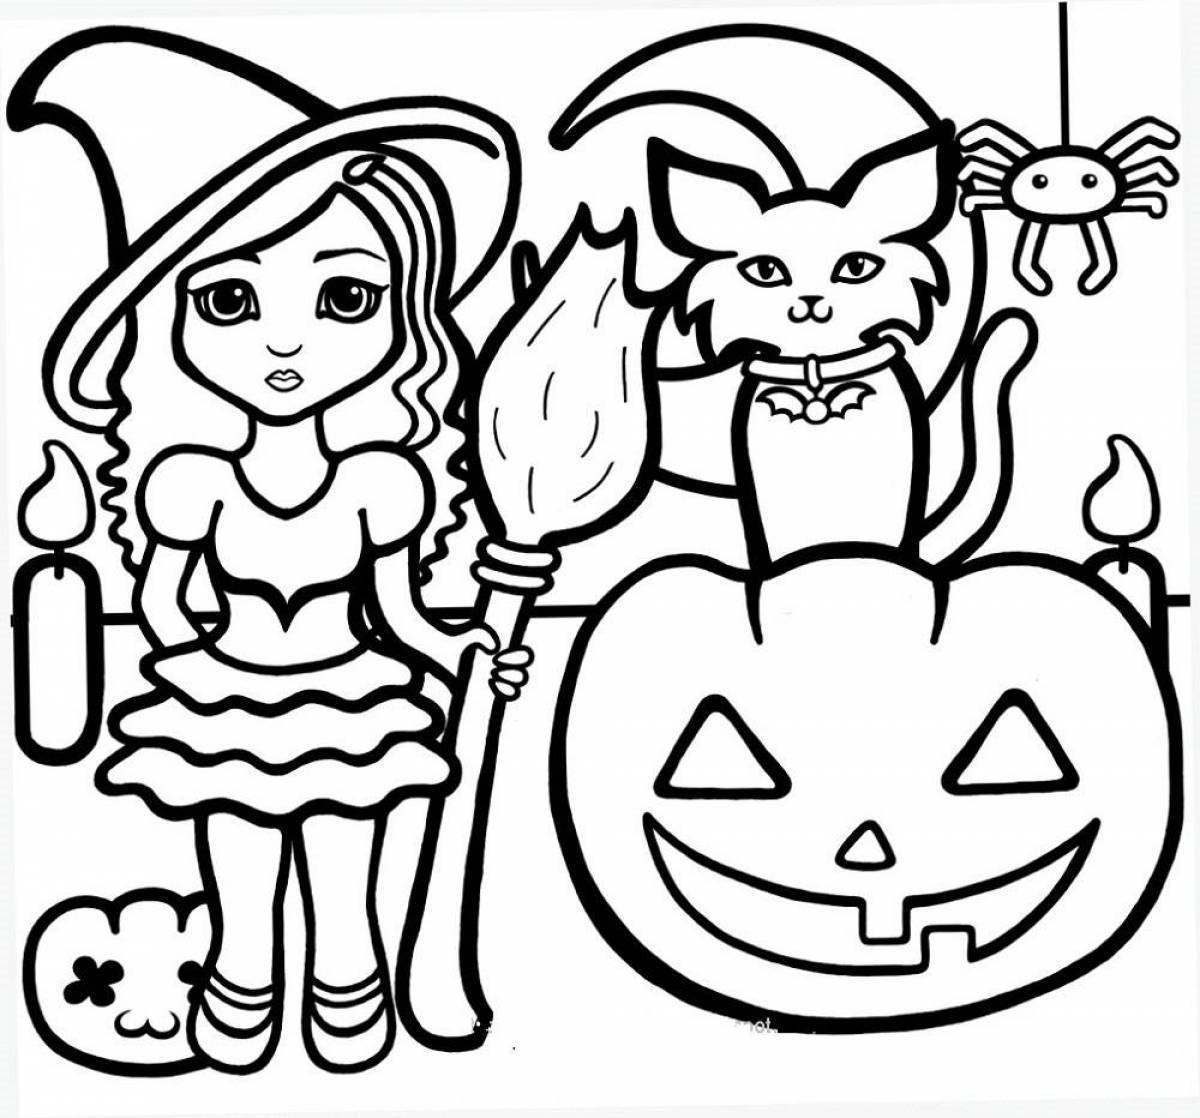 Horror halloween coloring book